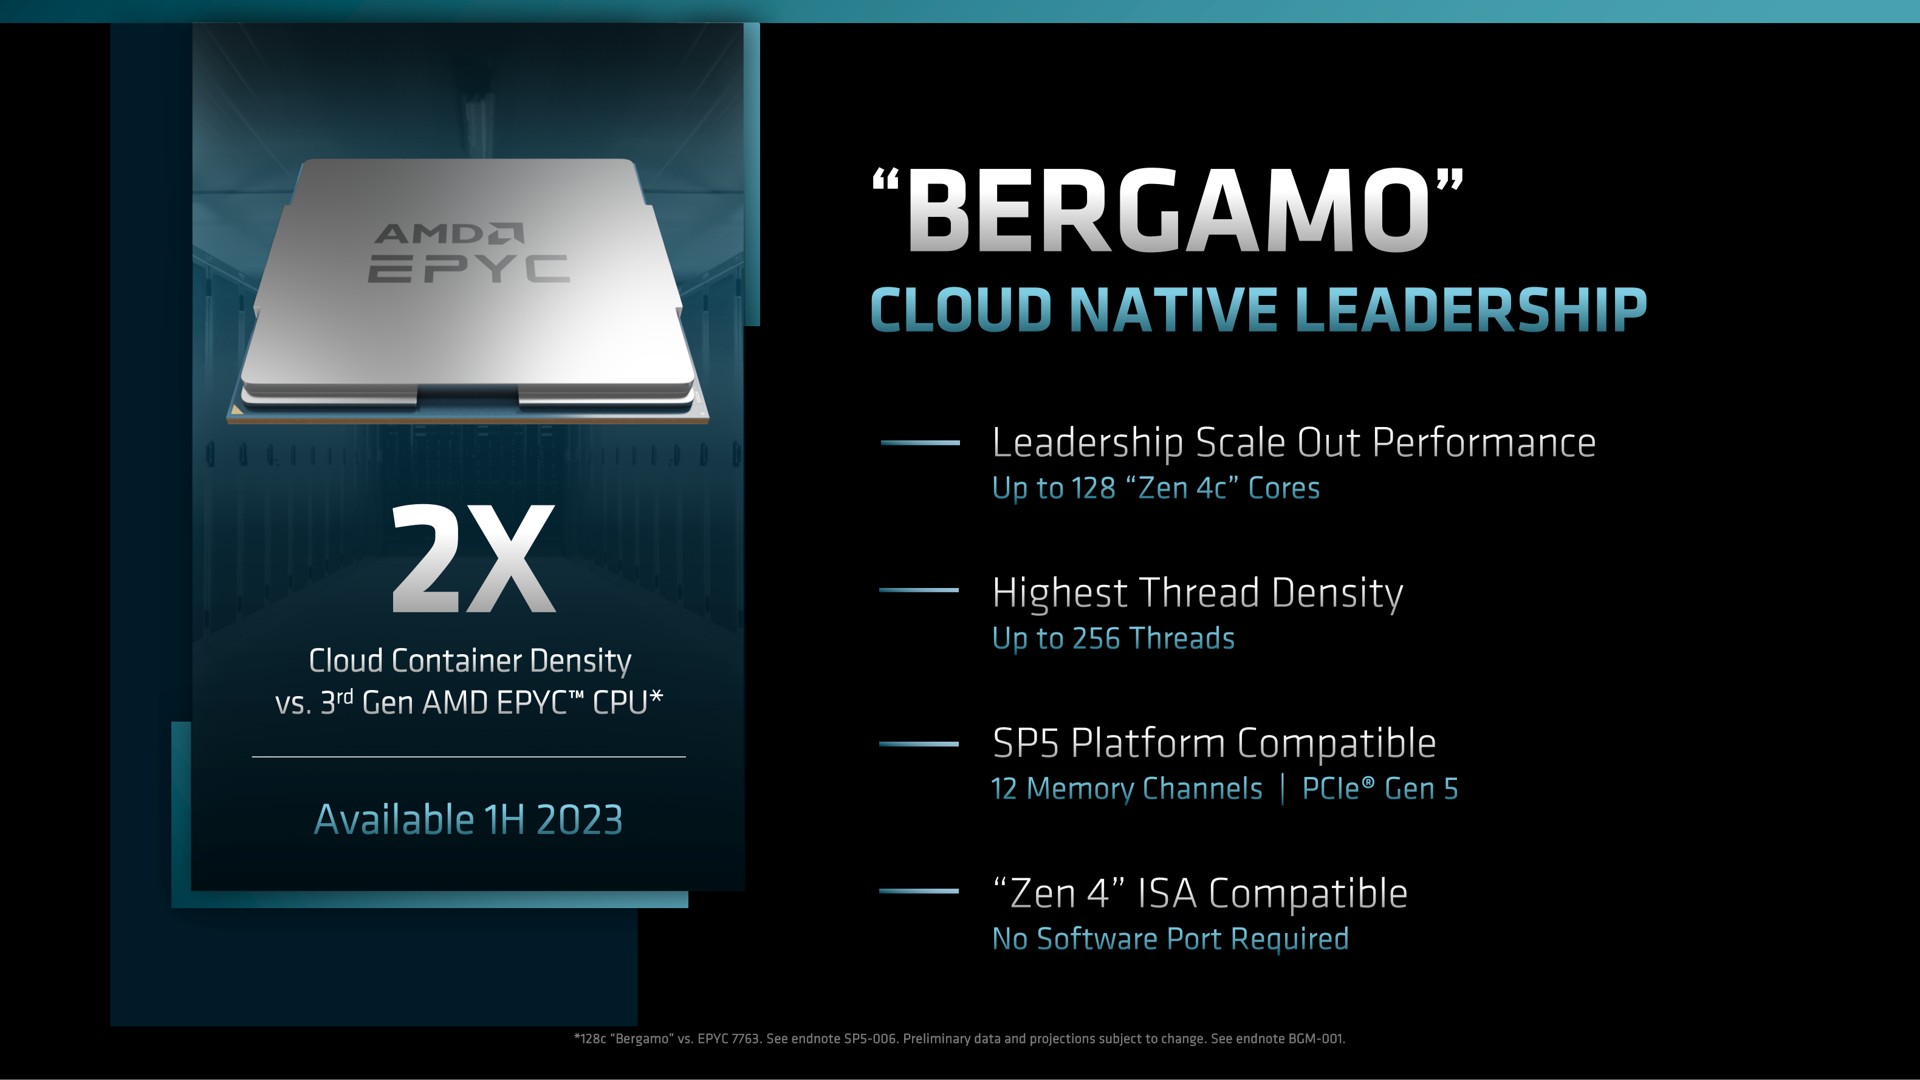 be cloud native leadership | AMD